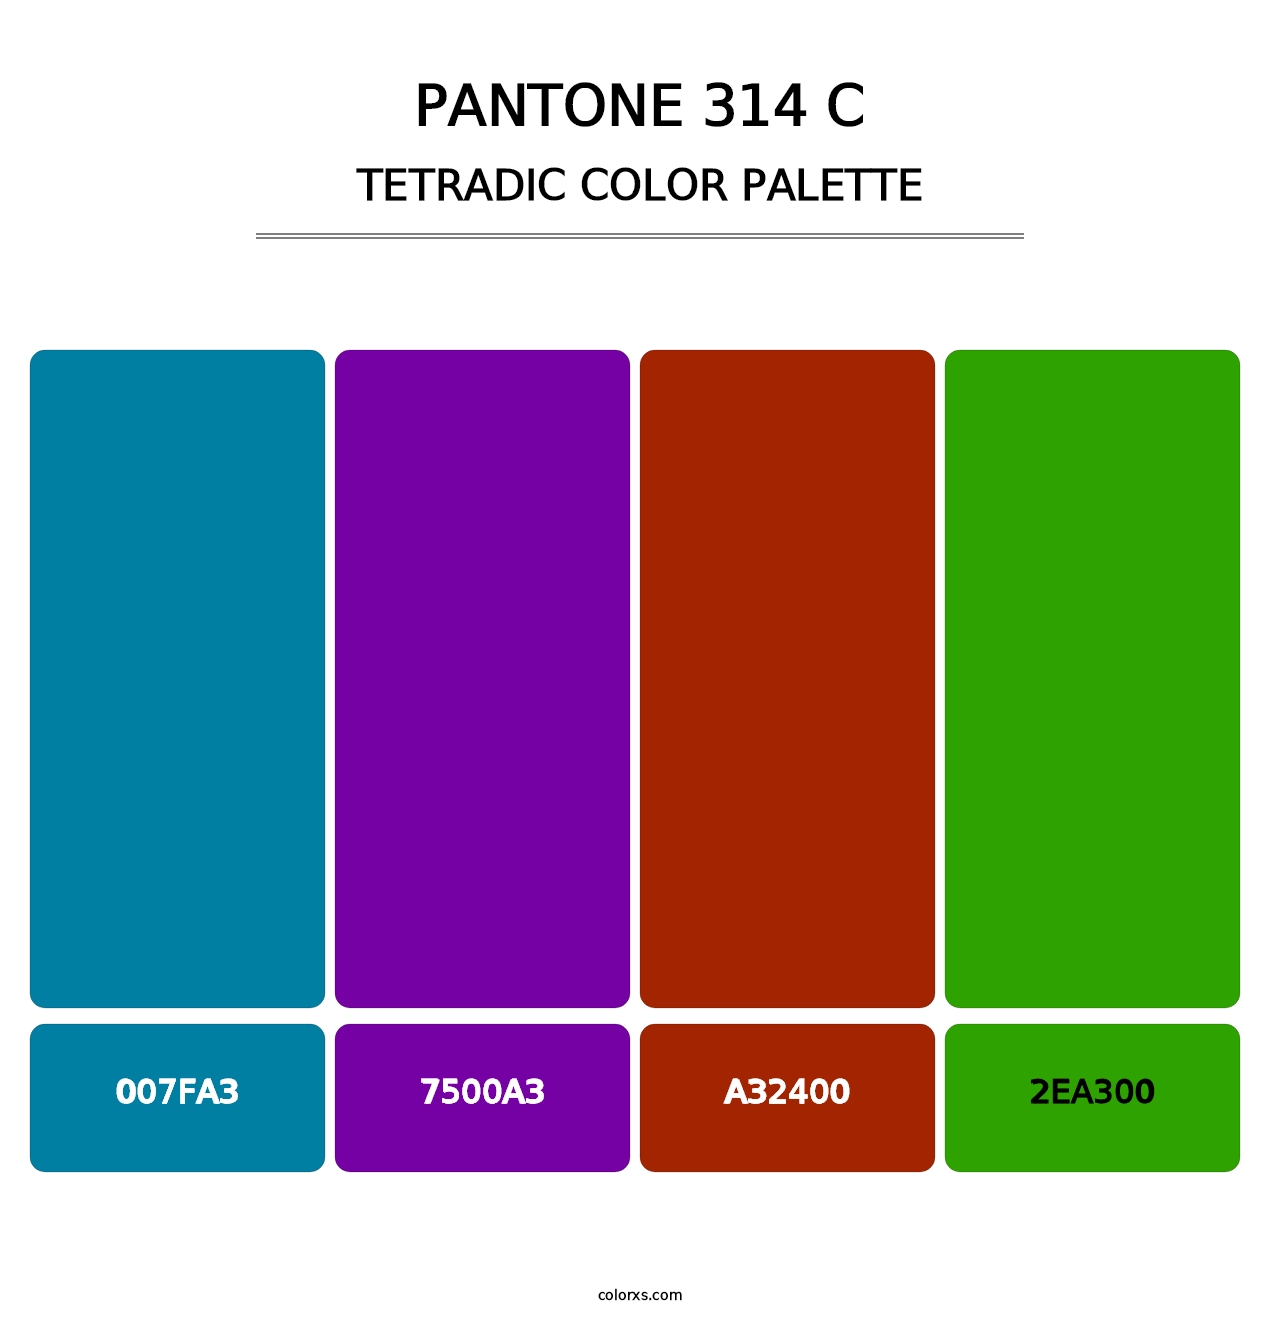 PANTONE 314 C - Tetradic Color Palette